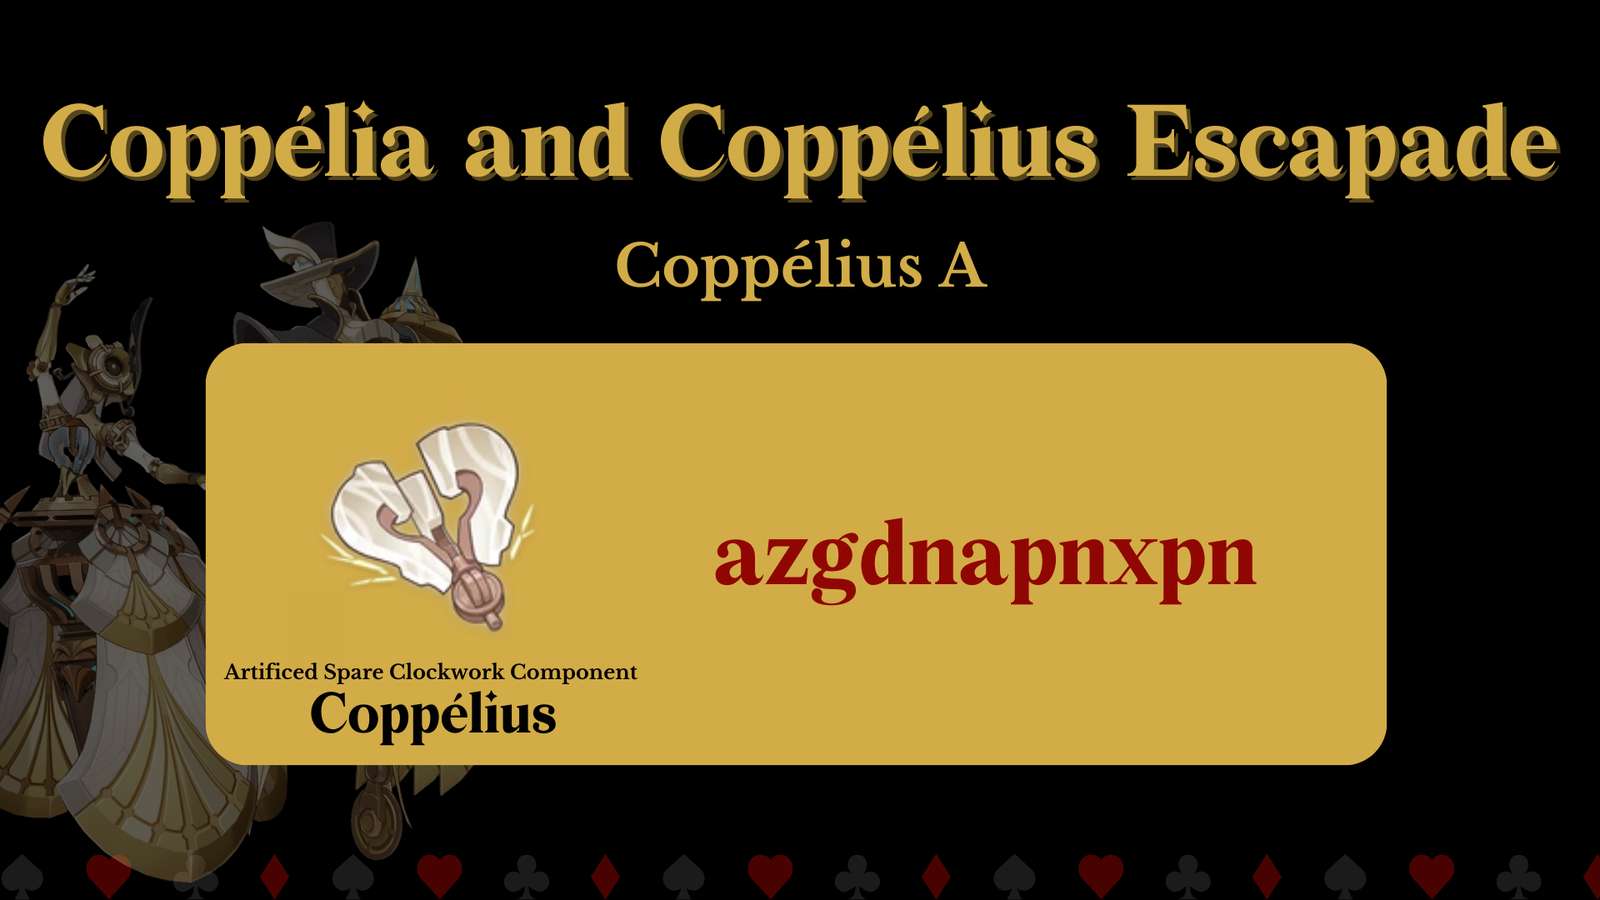 Coppelius A puzzle online